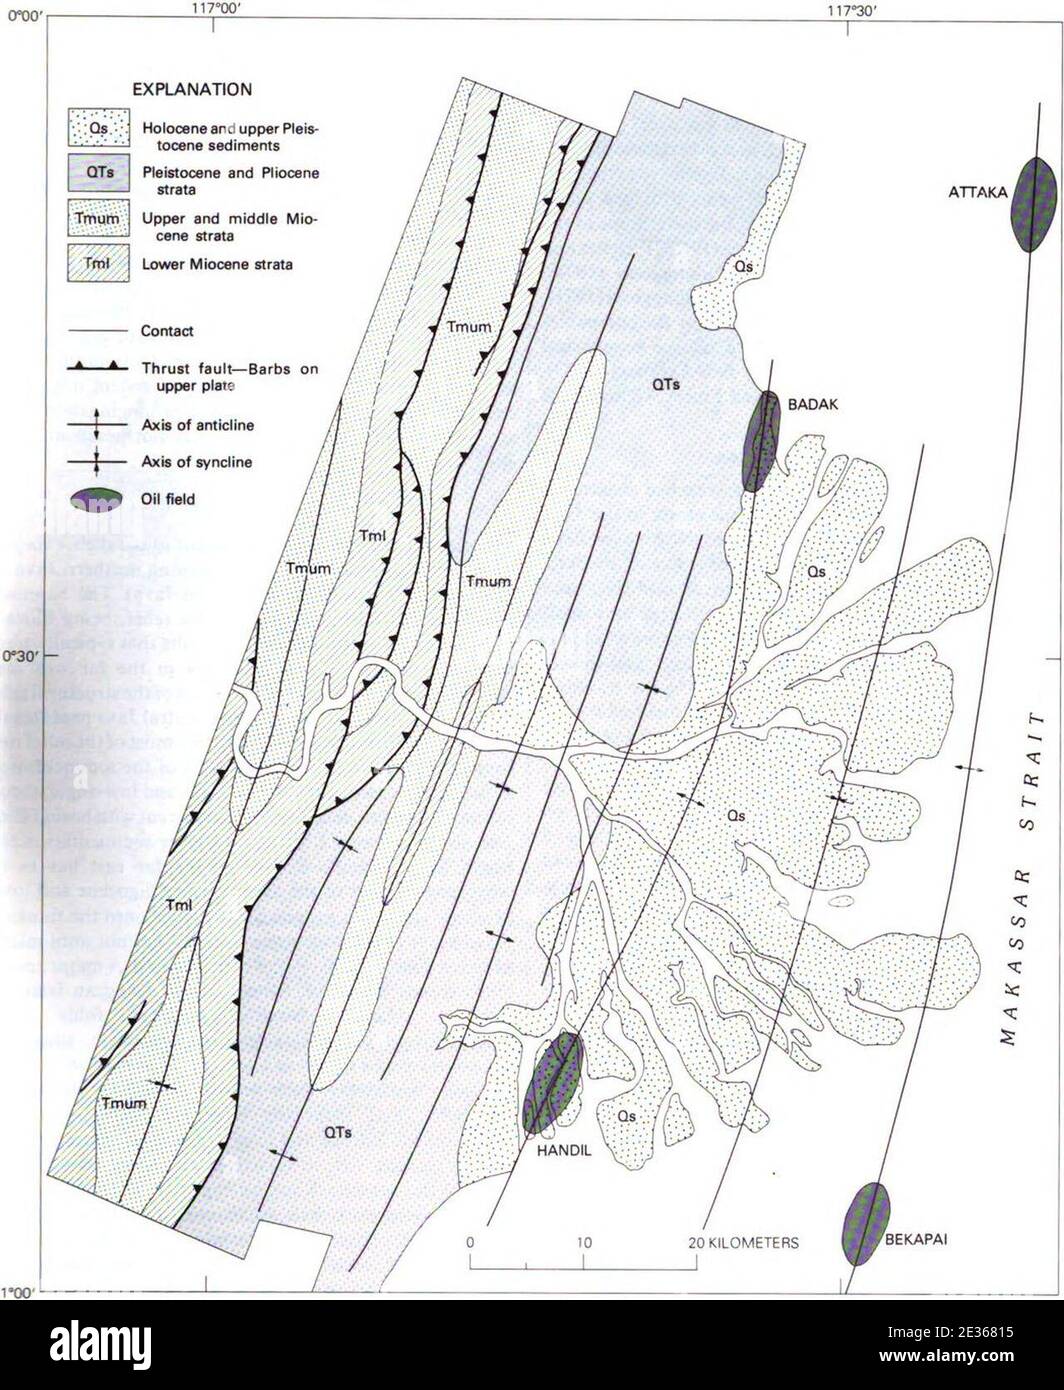 Mahakam delta geologic map. Stock Photo